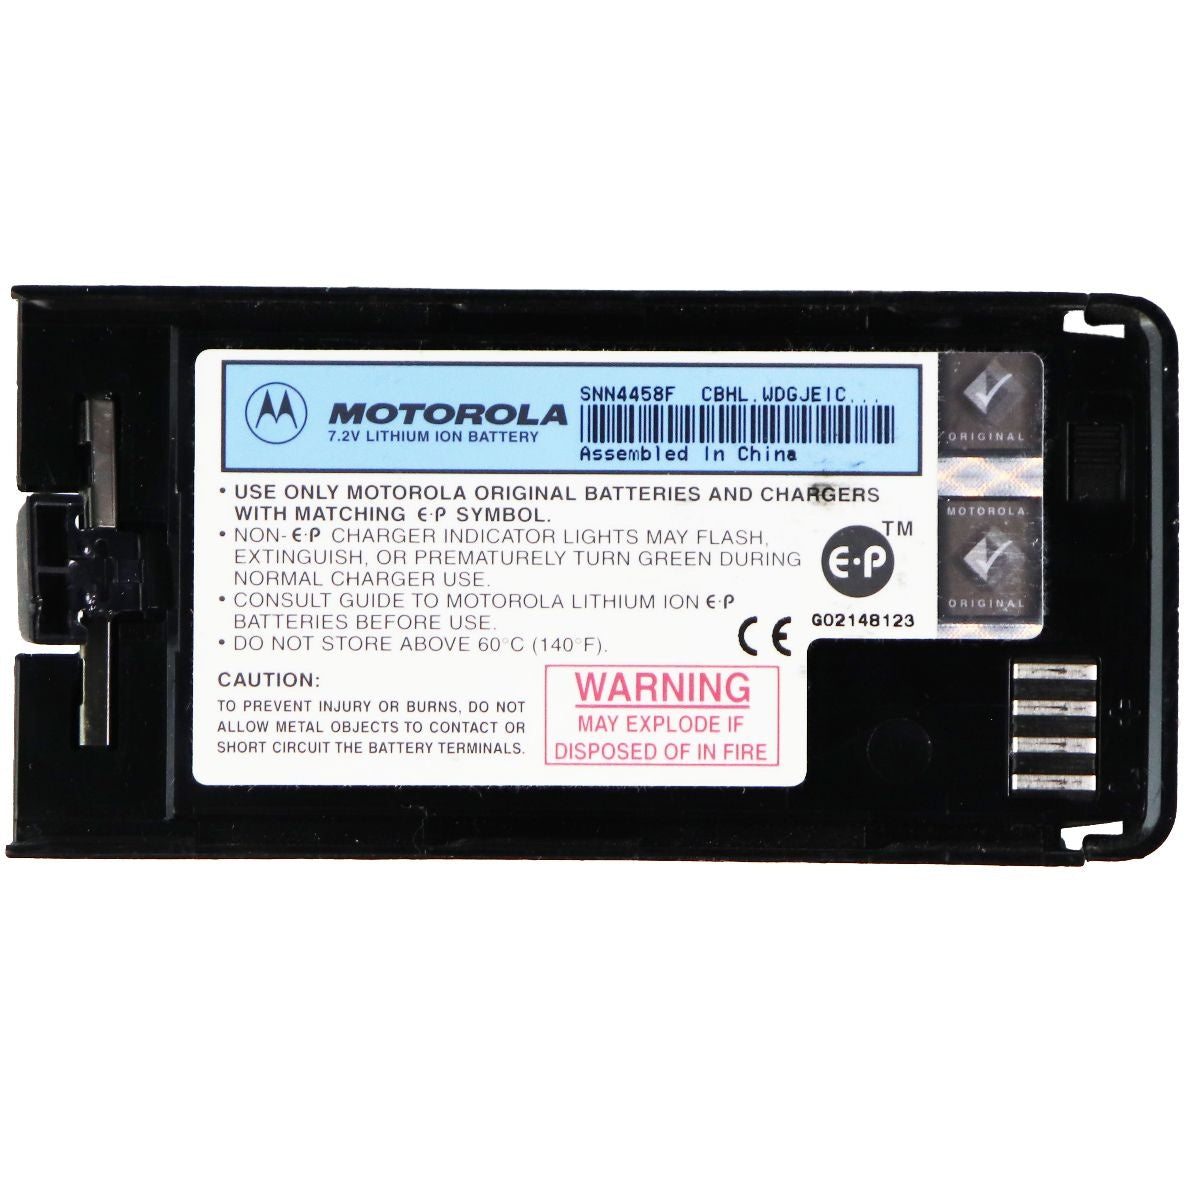 Motorola OEM 7.2V Lithium Ion Battery (SNN4458F) Cell Phone - Batteries Motorola    - Simple Cell Bulk Wholesale Pricing - USA Seller